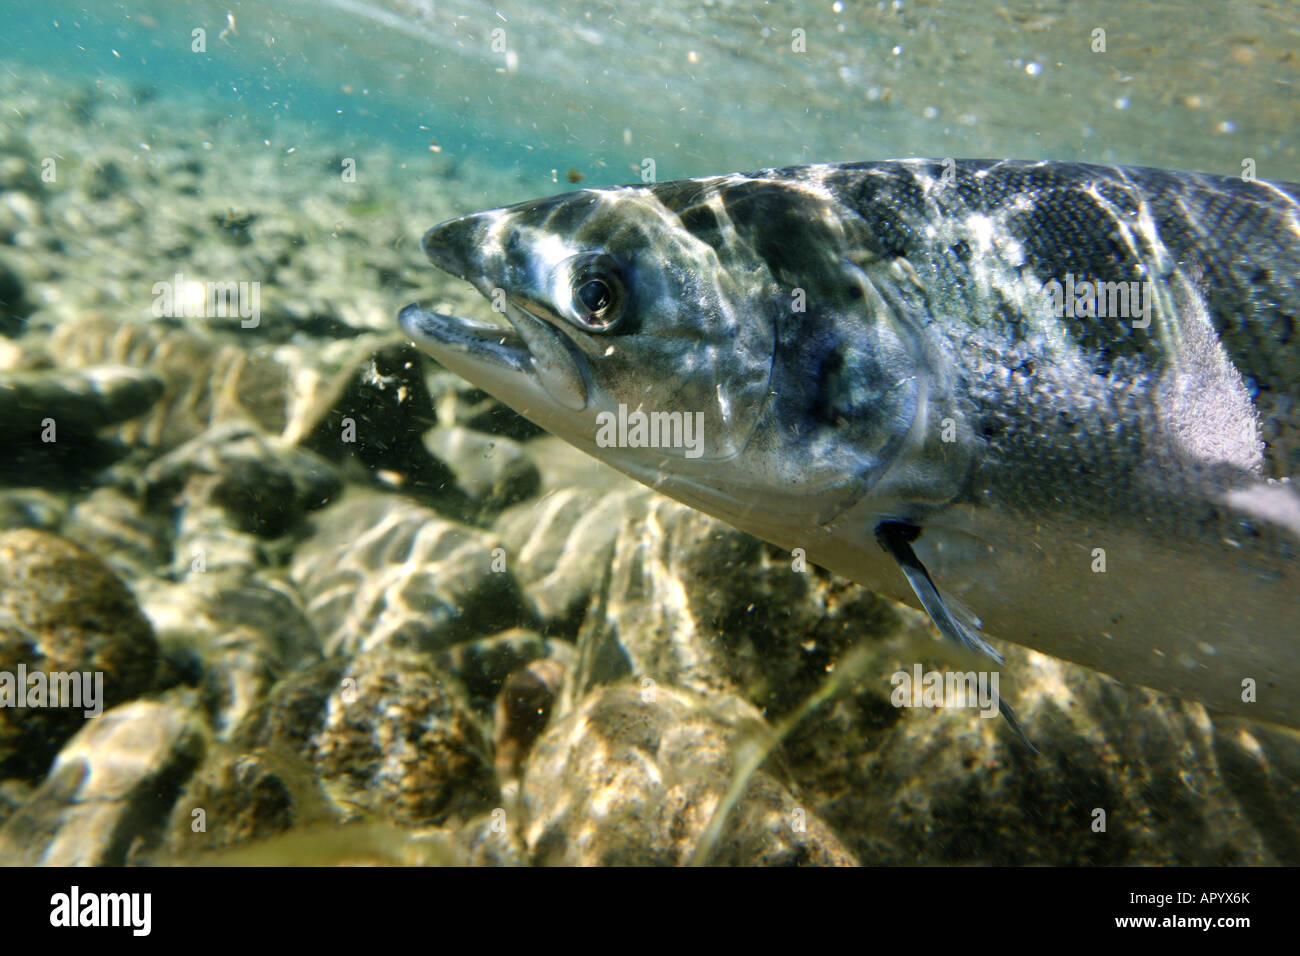 Unique shot of the atlantic salmon in its natural habitat Stock Photo